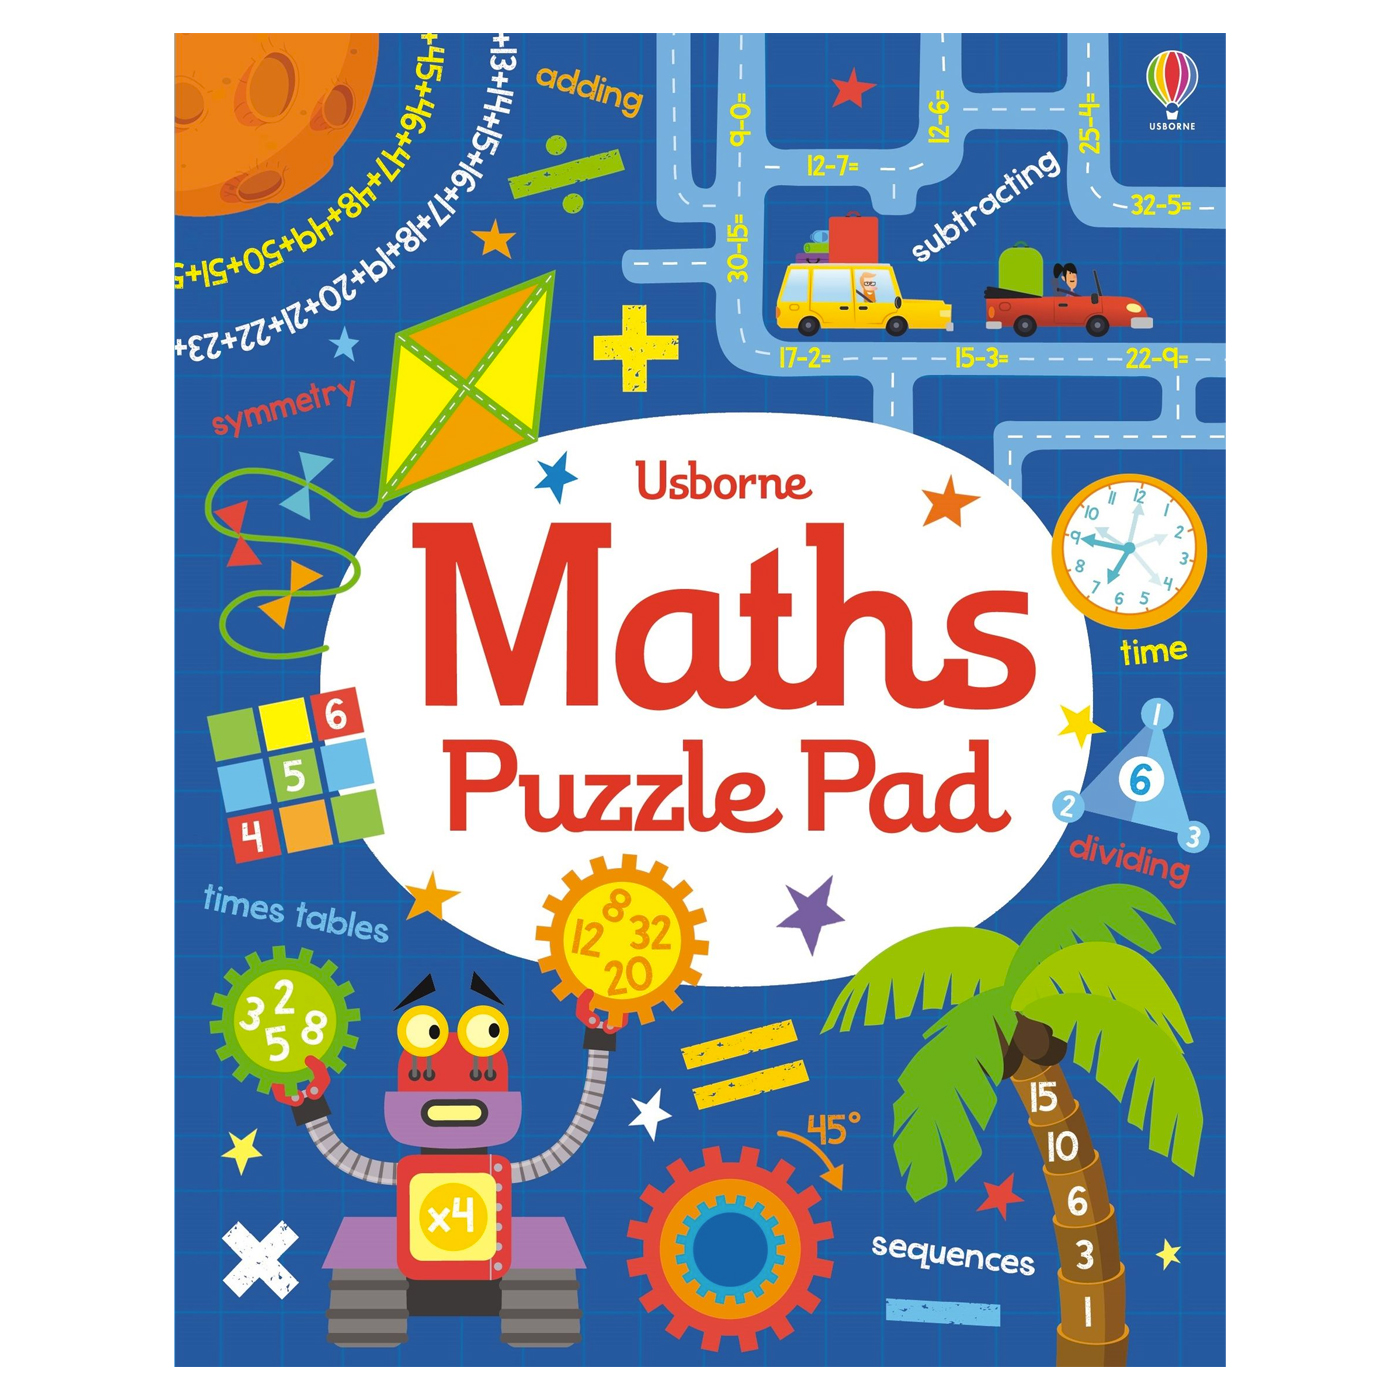  Maths Puzzle Pad